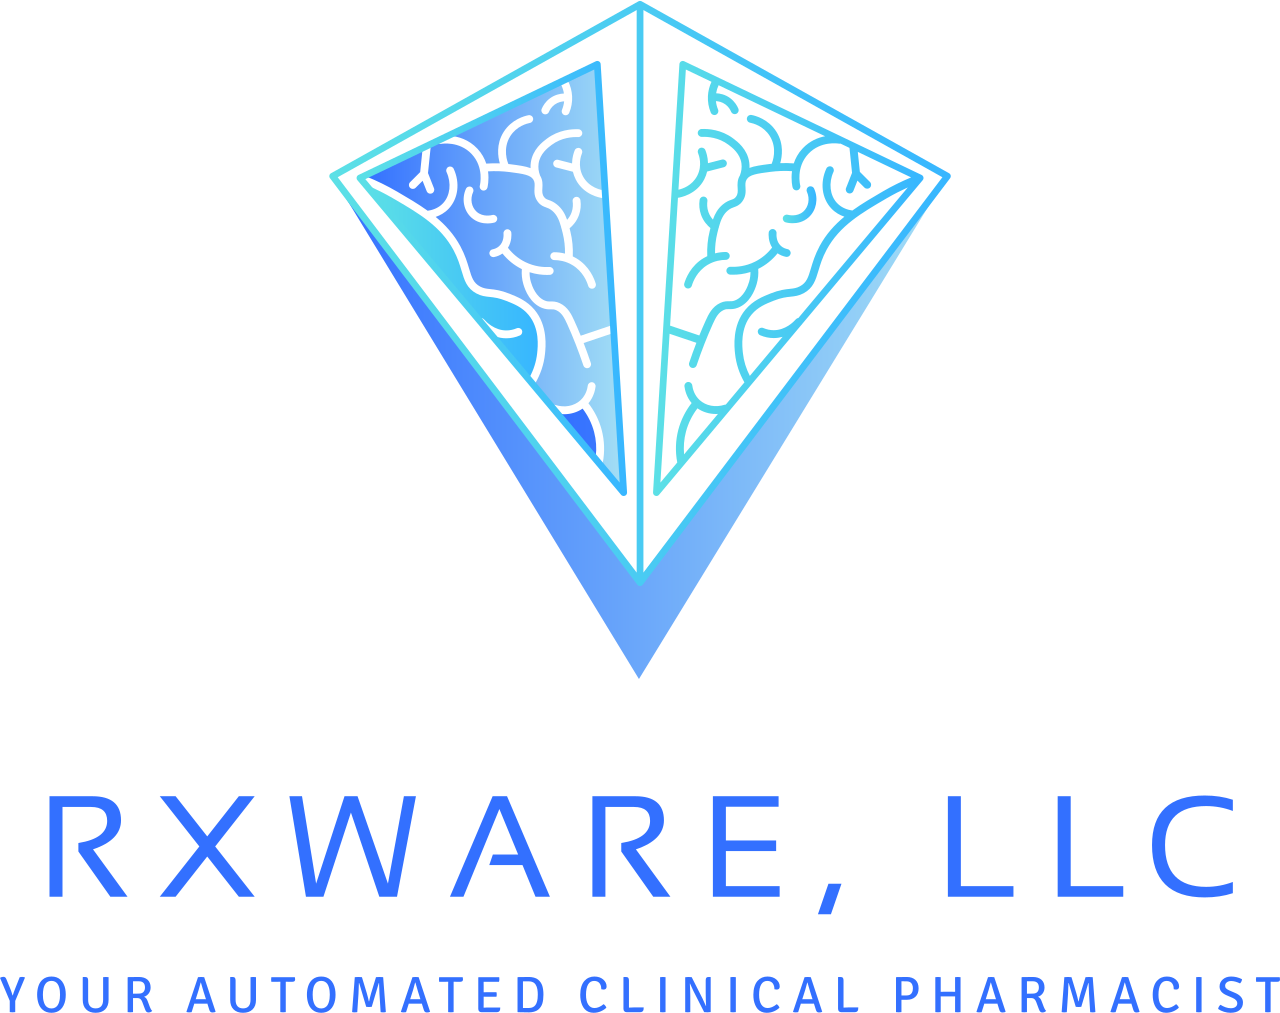 RxWare, LLC's web page